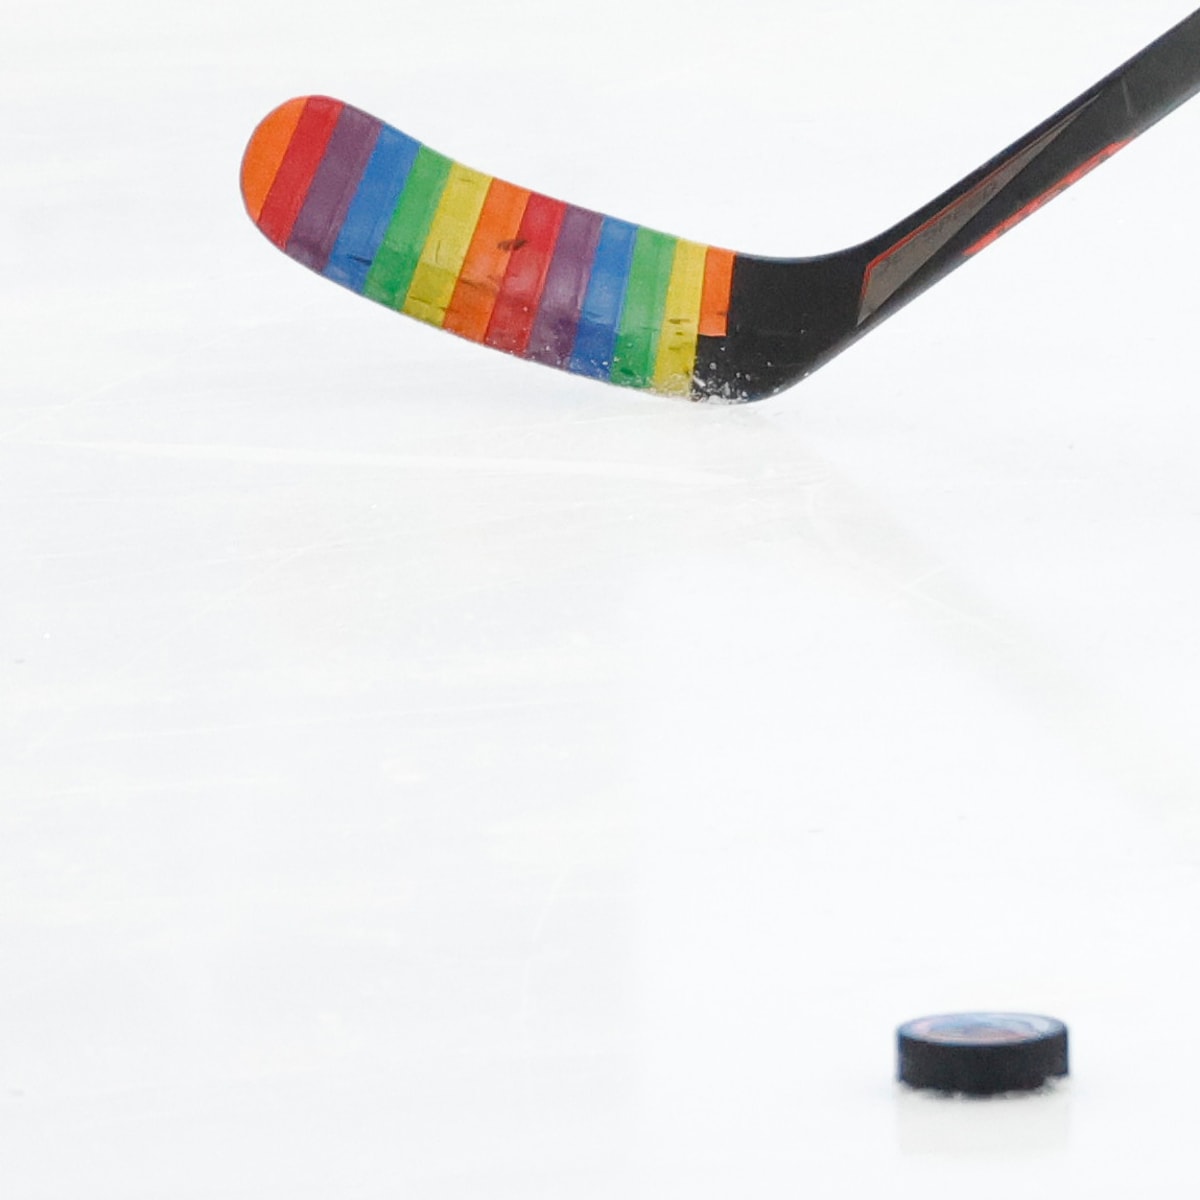 Winnipeg Jets proceed with Pride plan